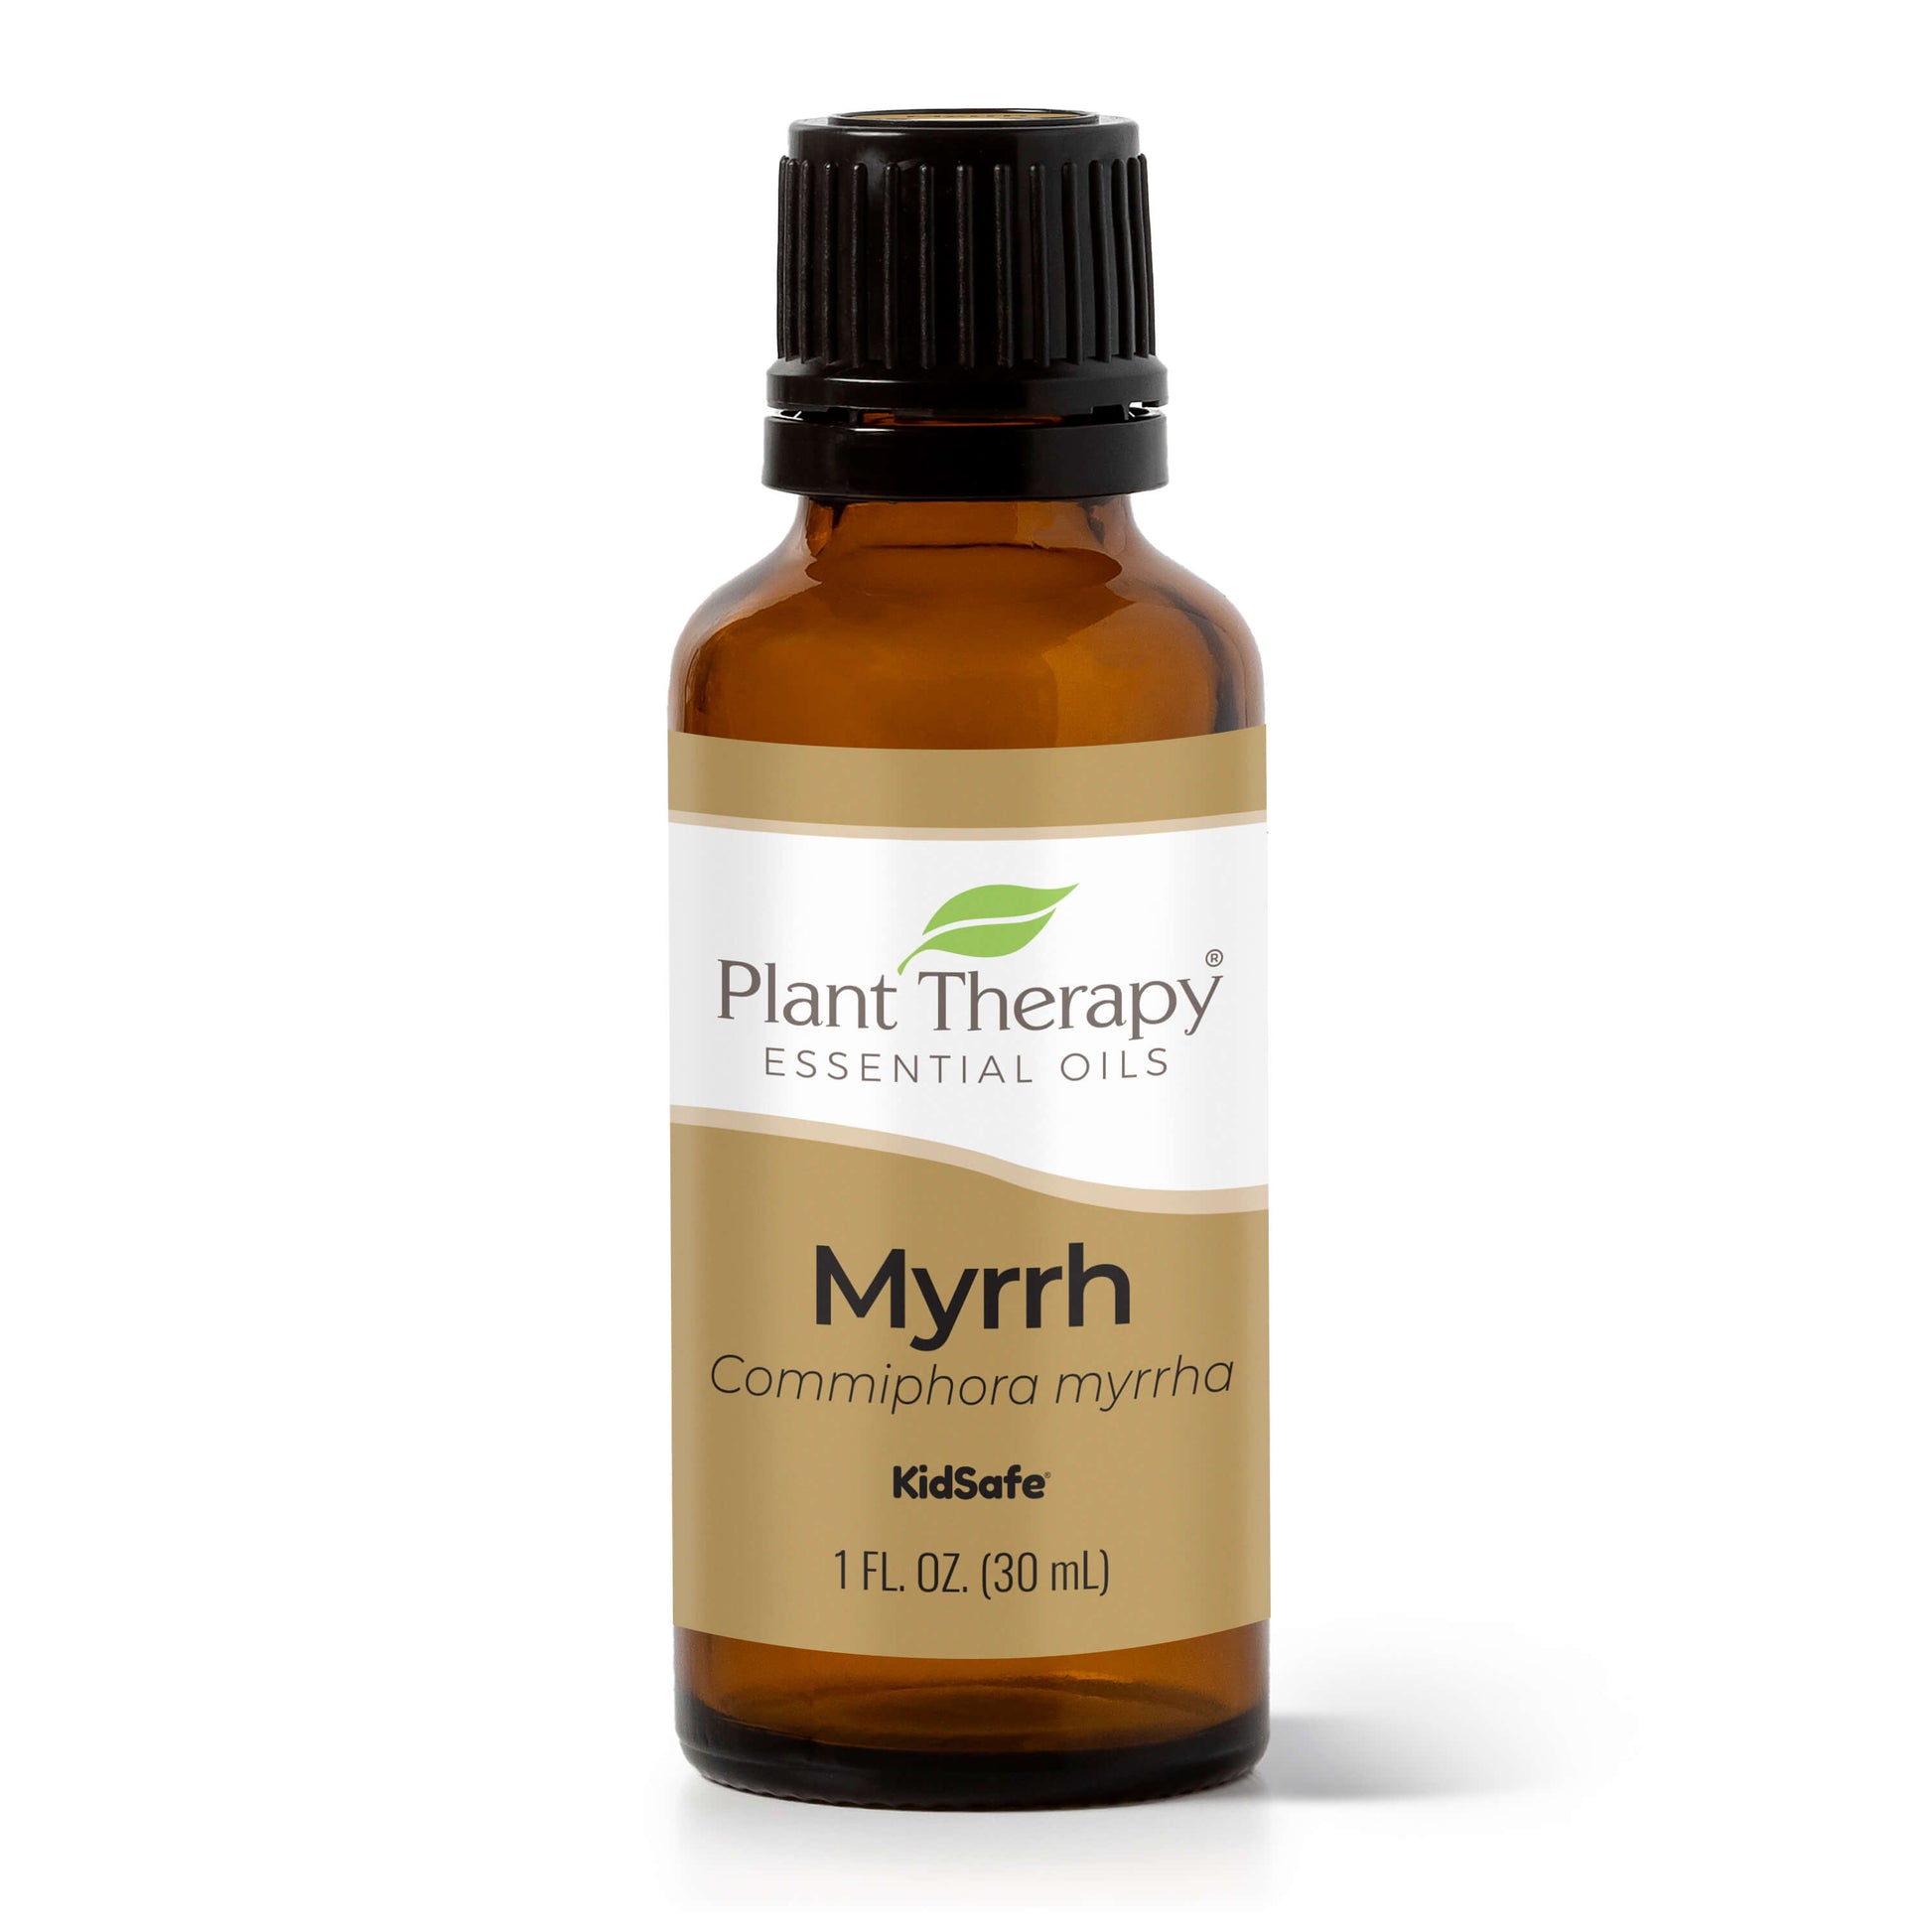 Frankincense + Myrrh Aromatherapy Oil - 10 ml- all natural